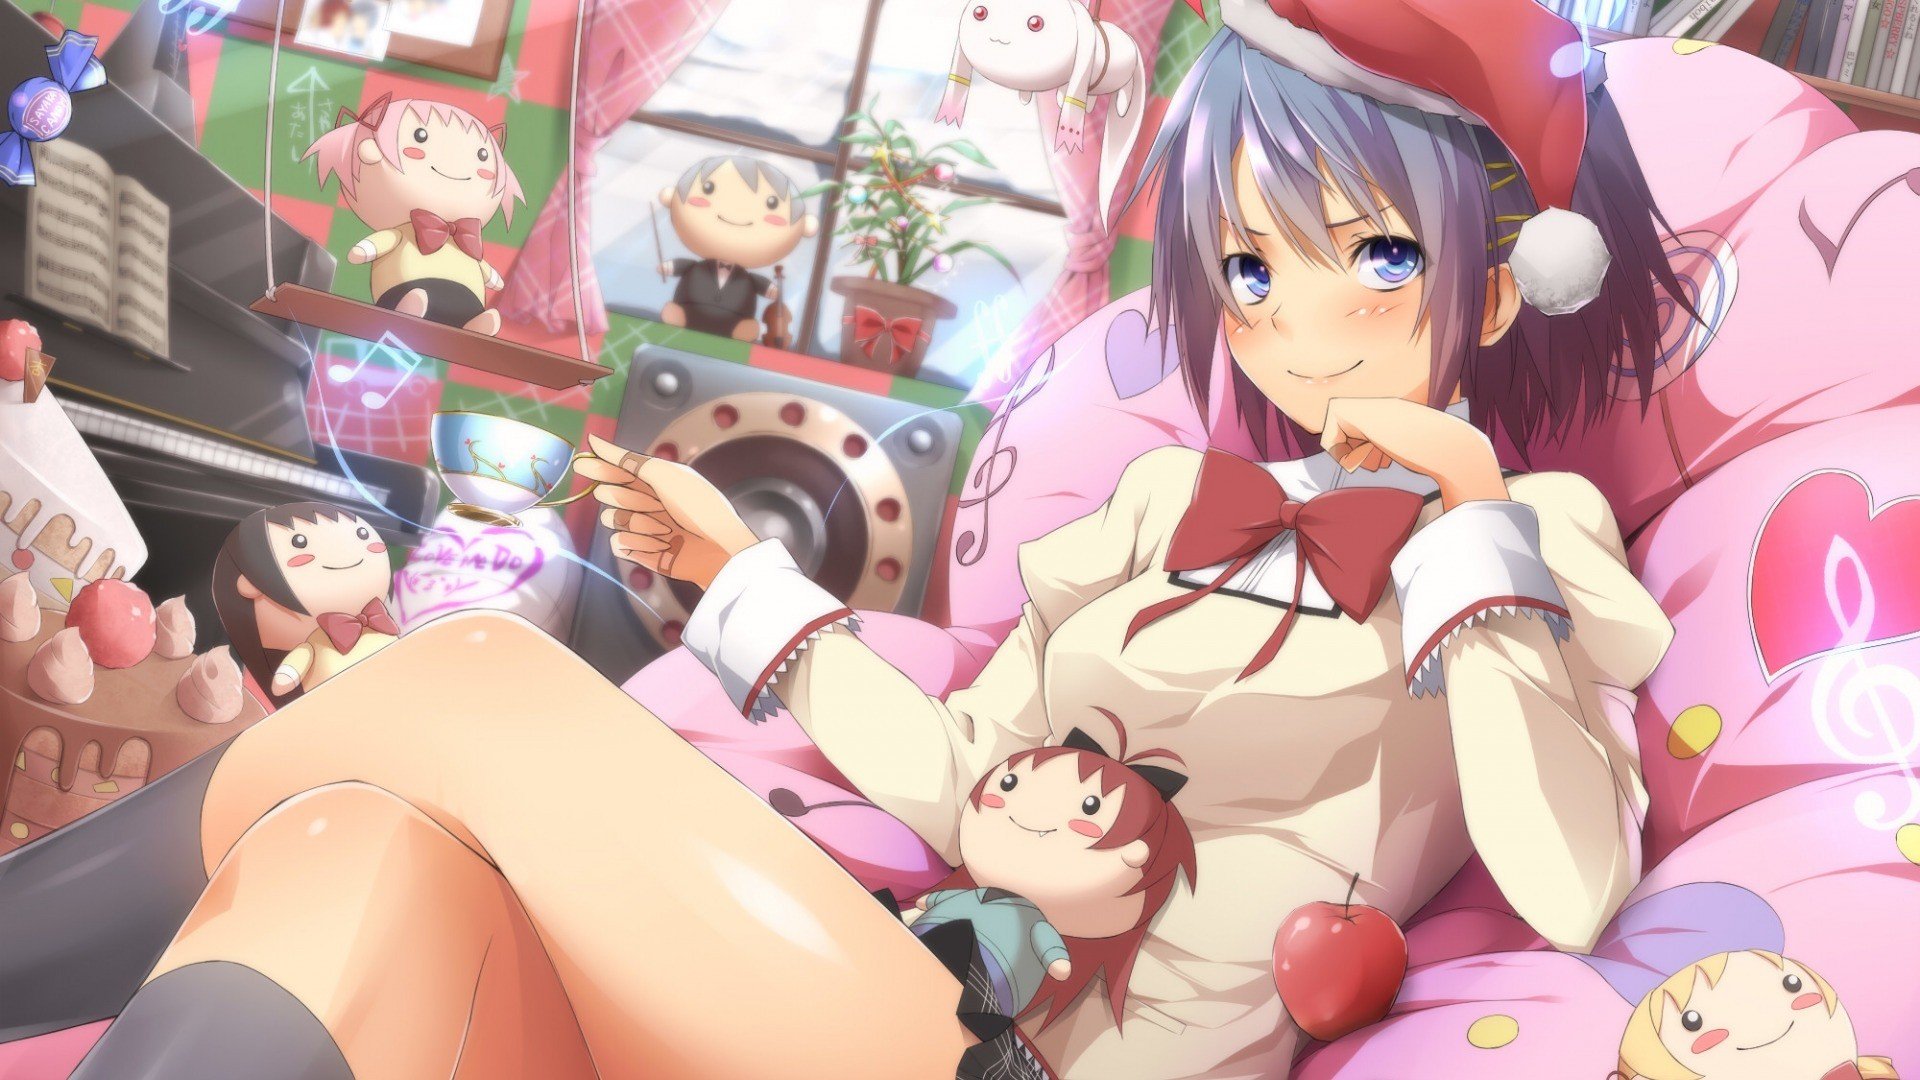 blue eyes, Short hair, Anime, Anime girls, Smiling, Christmas, Santa hats, Cup, Room, Mahou Shoujo Madoka Magica, Miki Sayaka Wallpaper